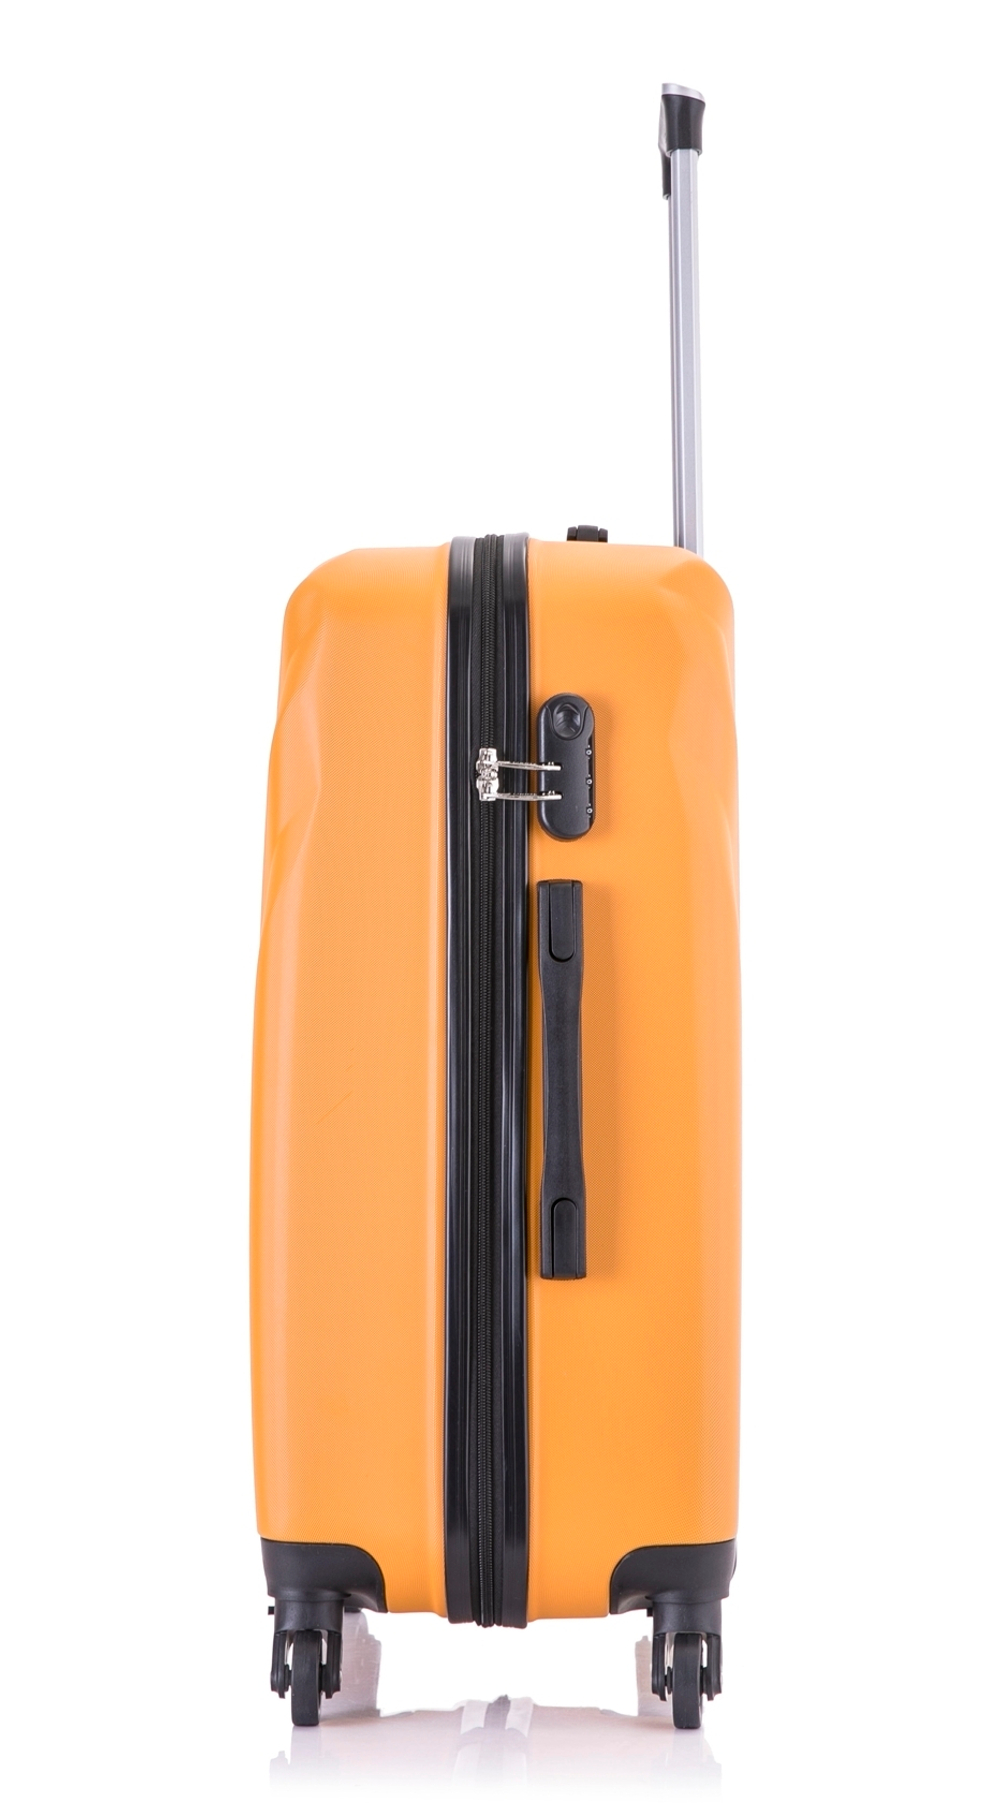 Чемодан на колесах L’case Phuket размера XL (78х54х30 см), объем 110 литров, вес 3,8 кг, Оранжевый